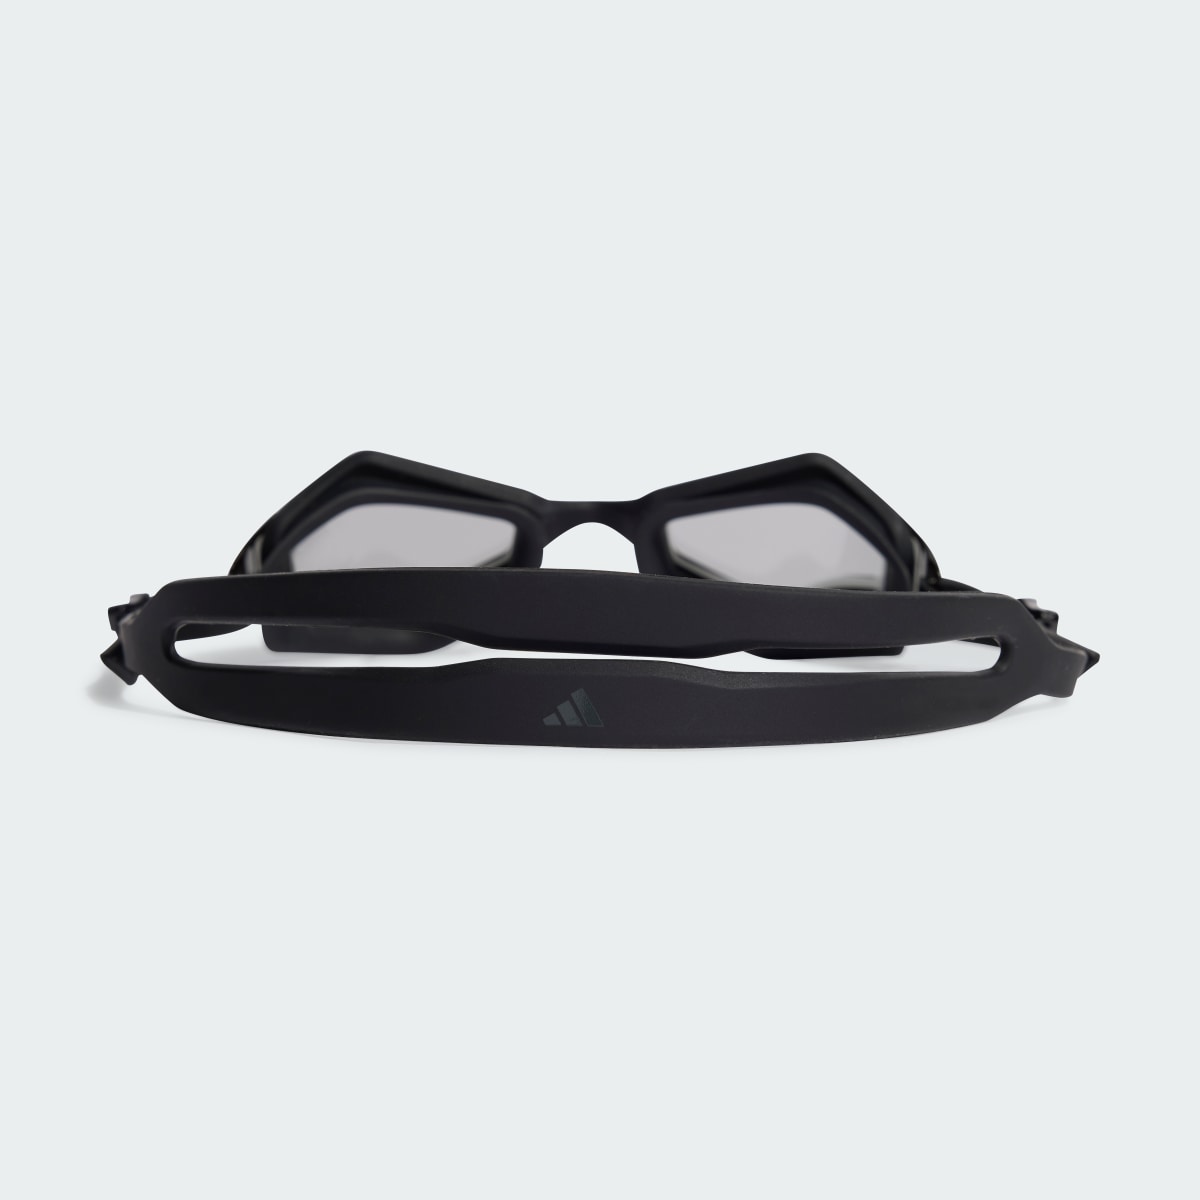 Adidas Ripstream Soft Swim Goggles. 4